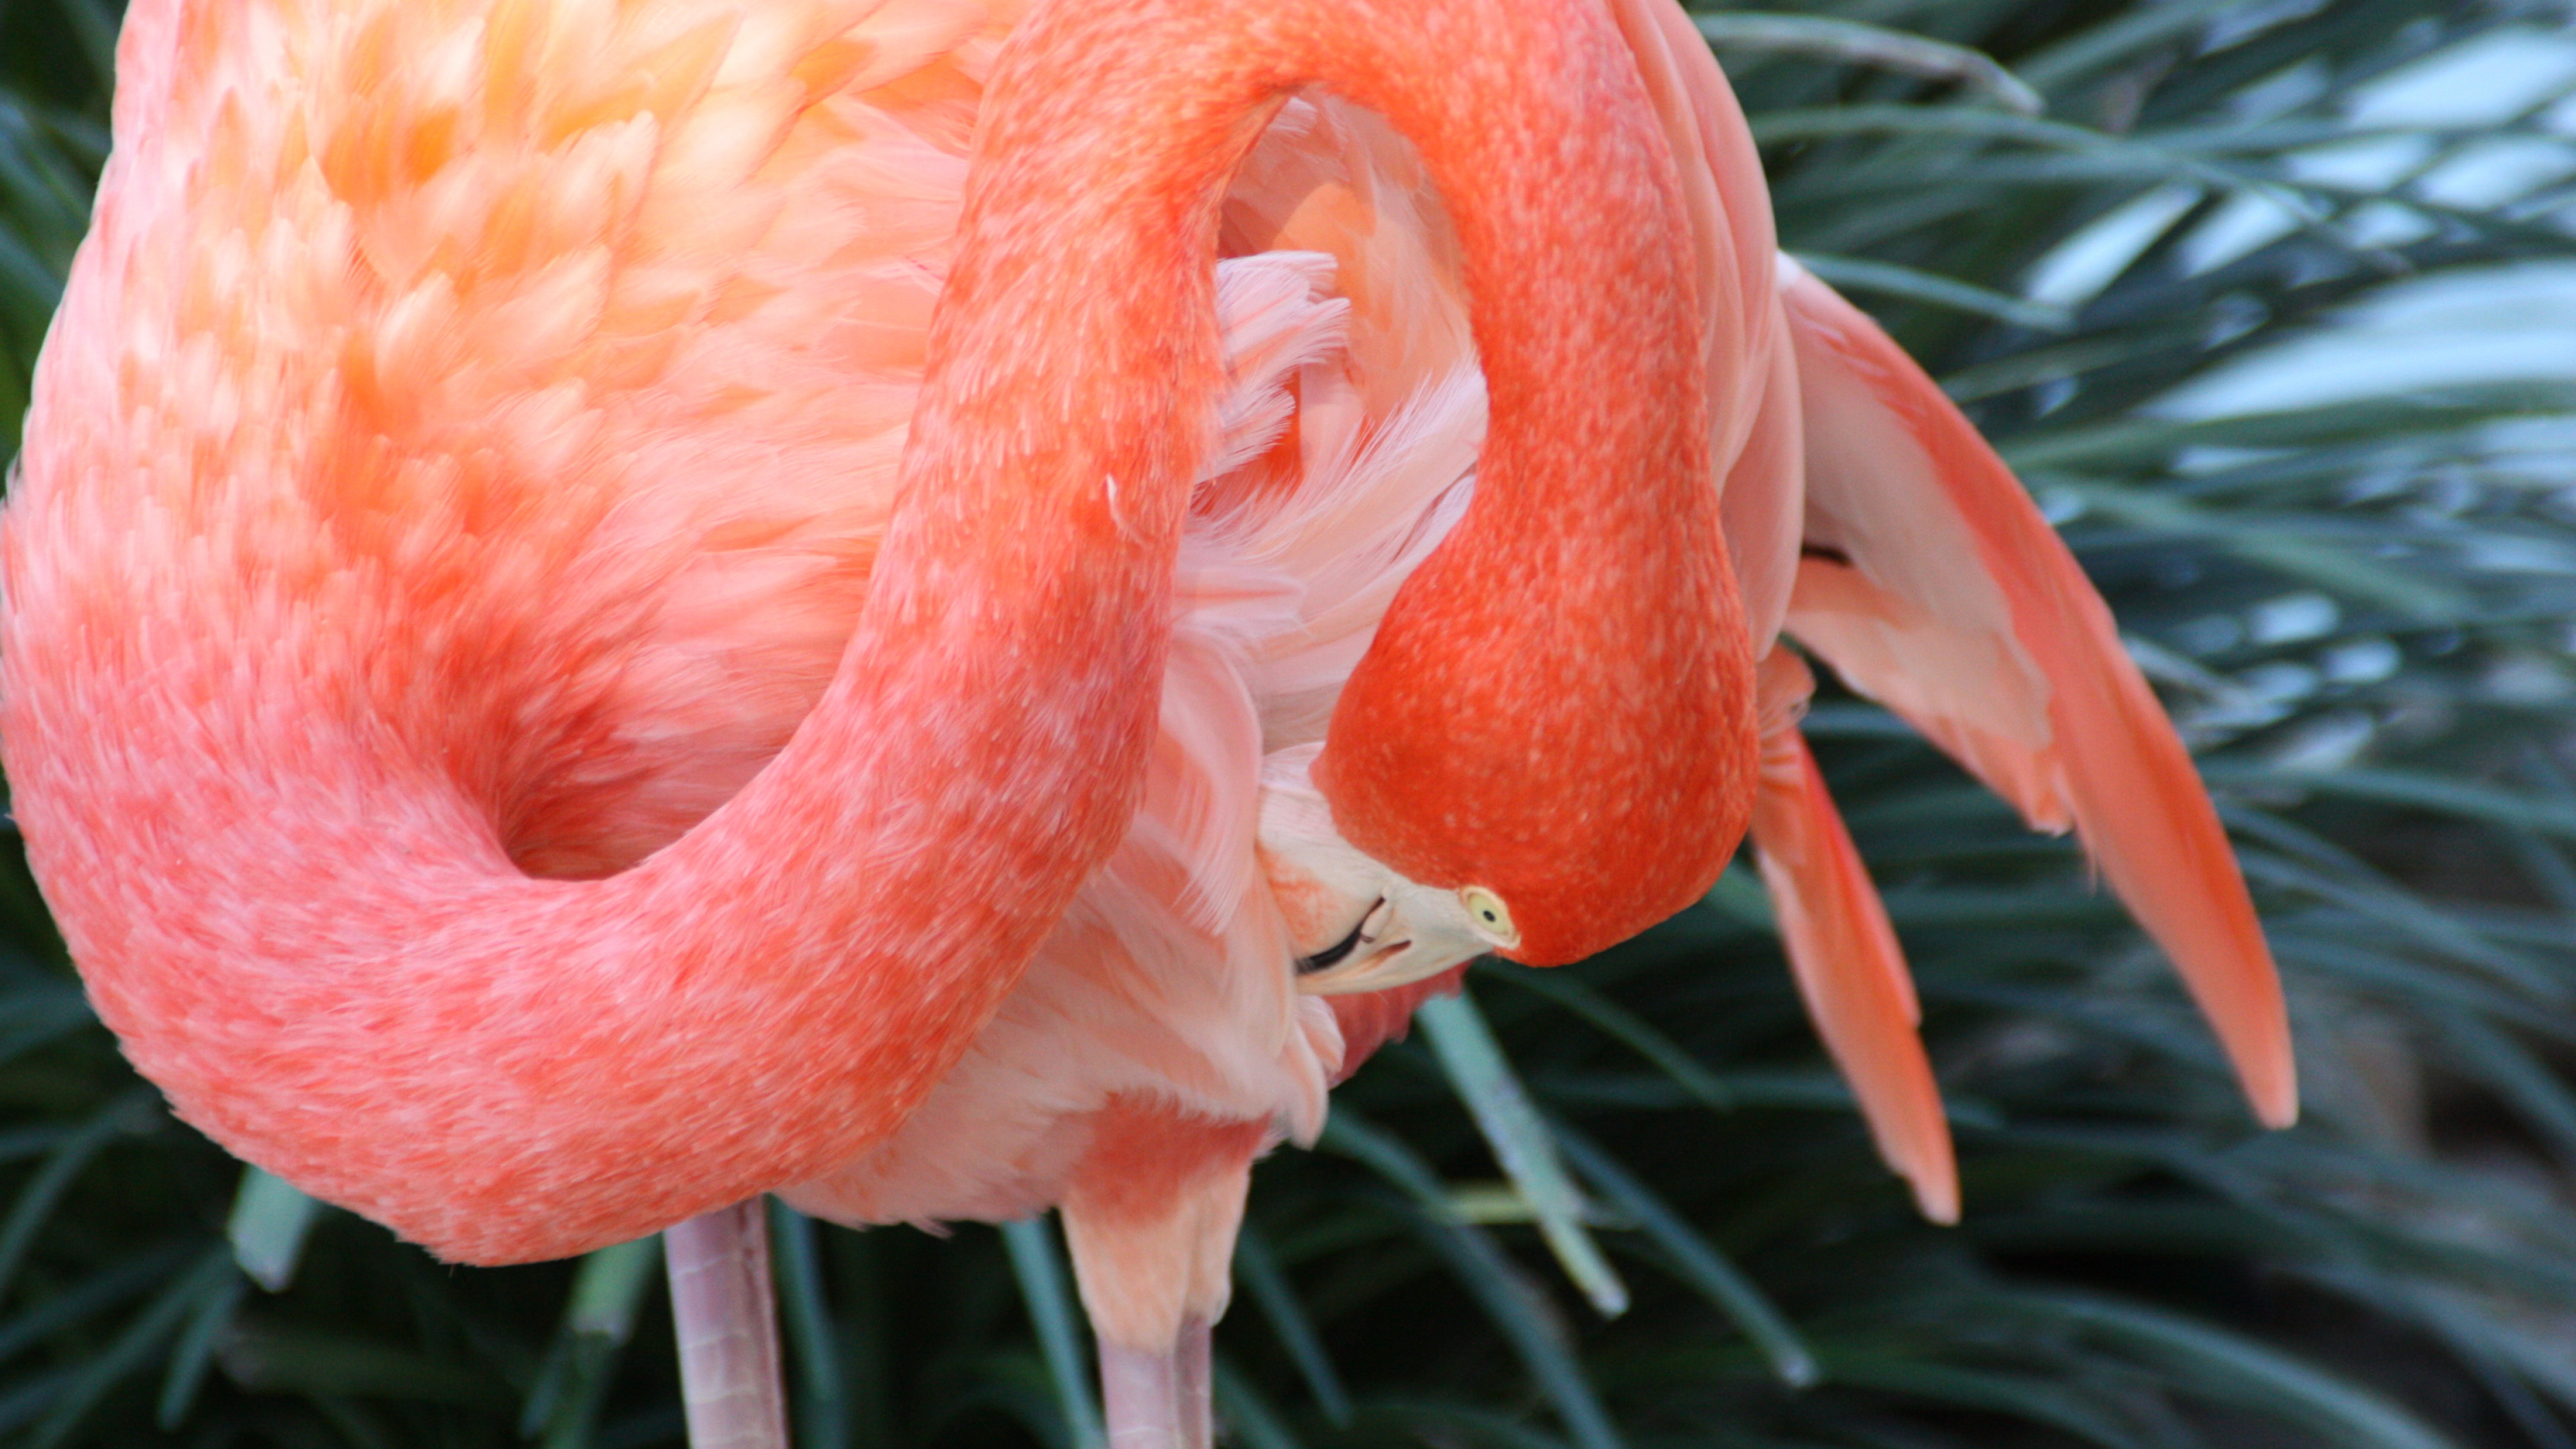 Wallpaper Flamingo, HD, 4k wallpaper, Sun Diego, zoo, bird, red, plumage,  tourism, pond, OS #2551